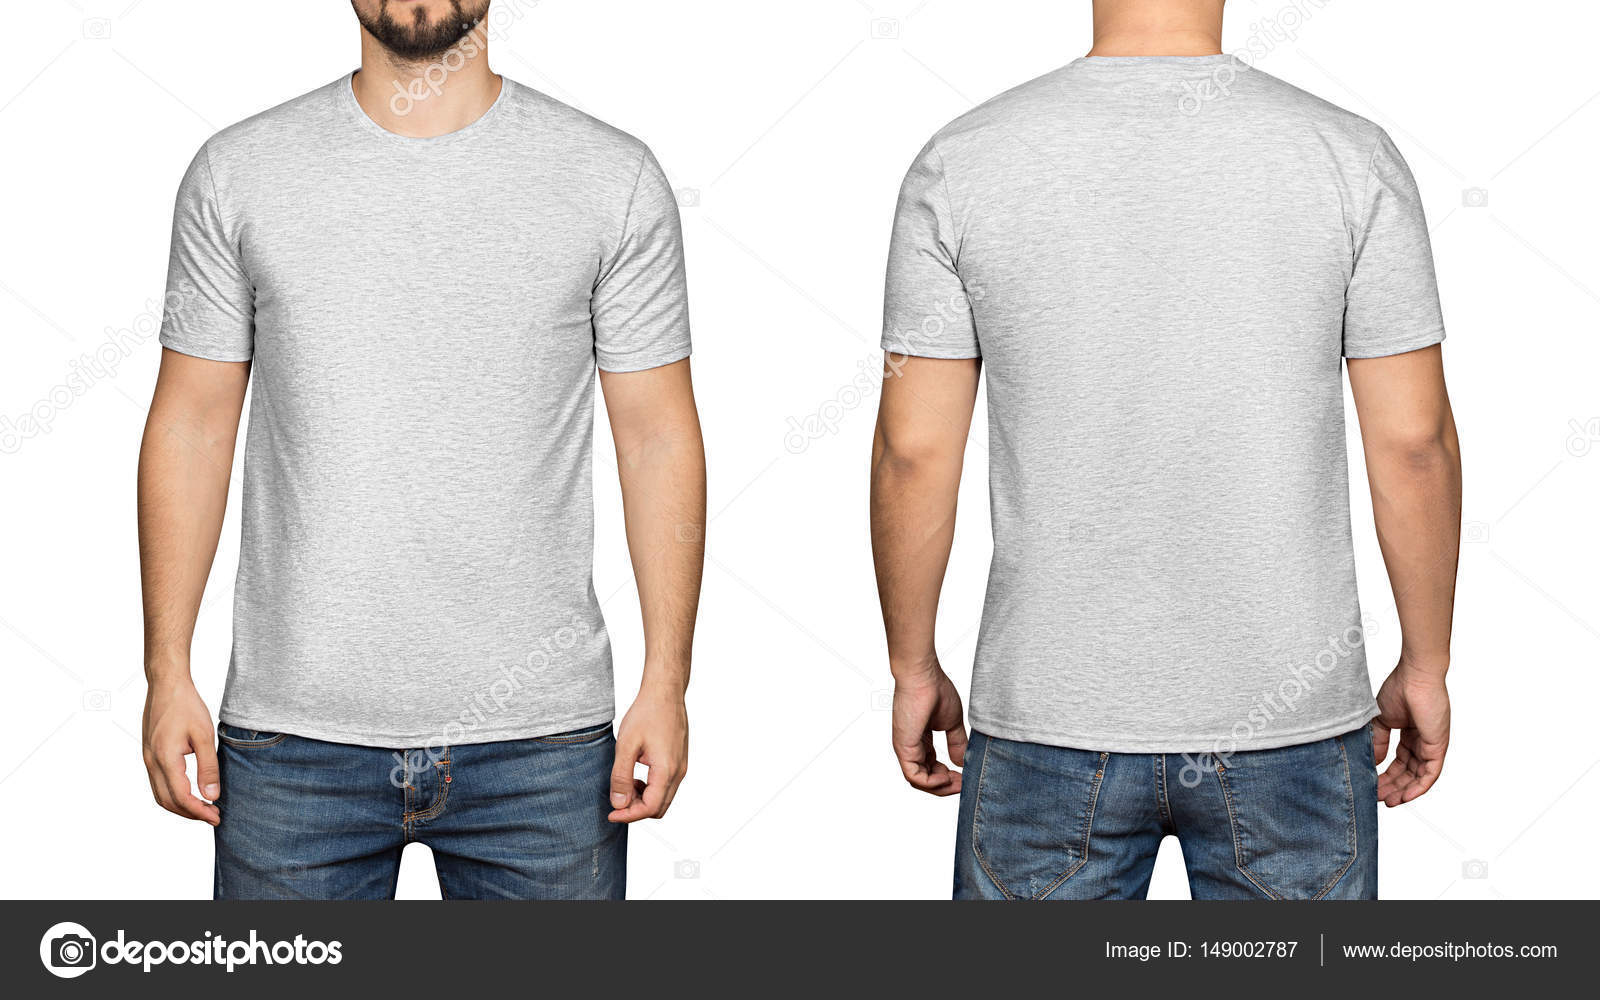 https://st3.depositphotos.com/11216536/14900/i/1600/depositphotos_149002787-stock-photo-gray-t-shirt-on-a.jpg